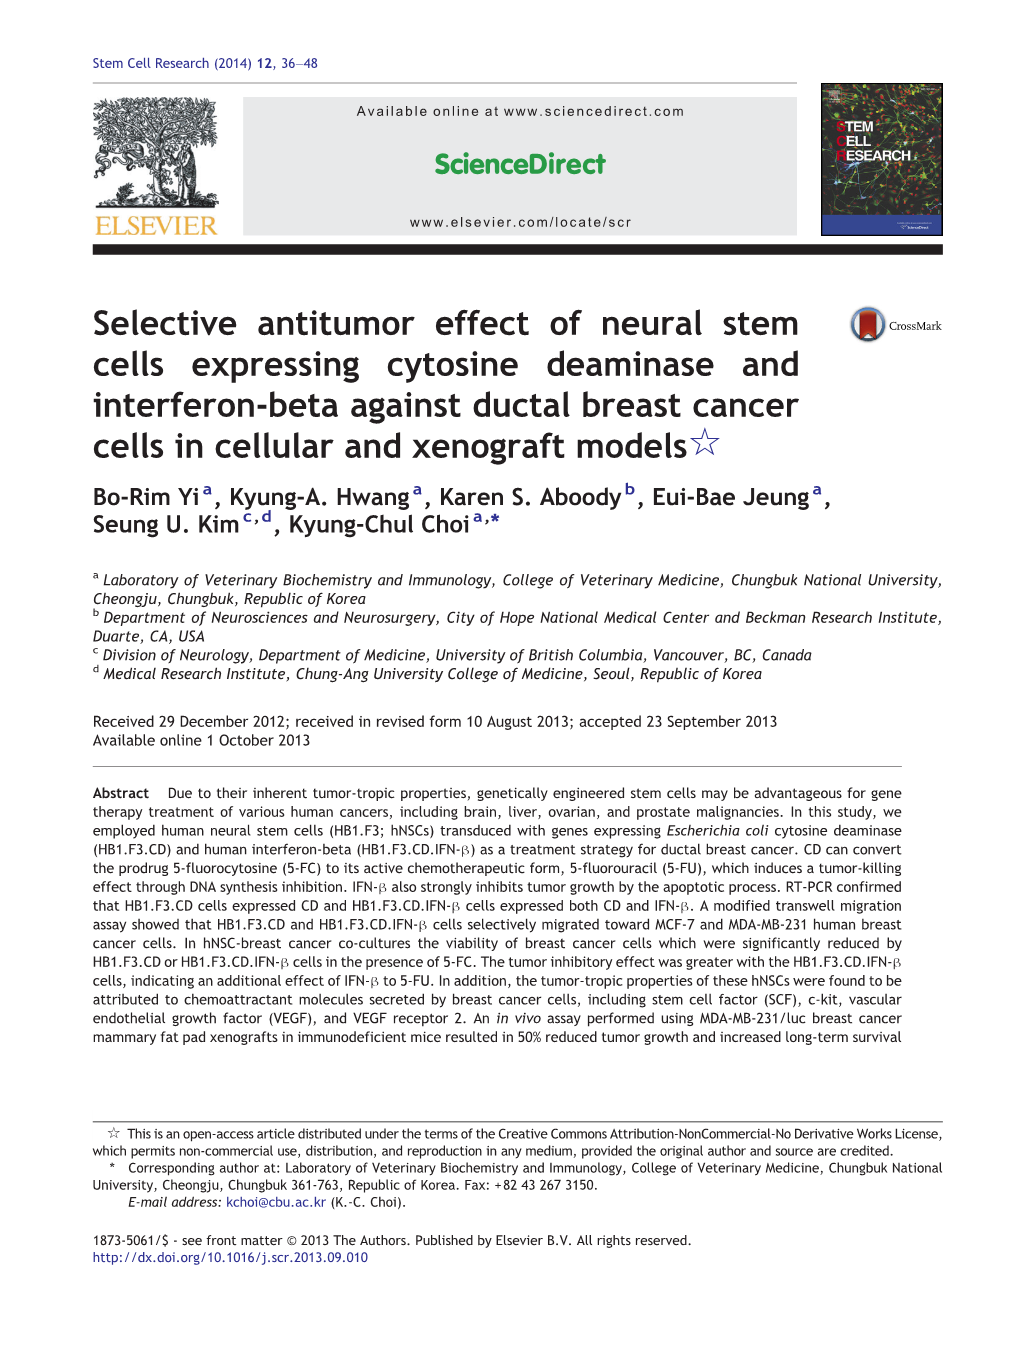 Selective Antitumor Effect of Neural Stem Cells Expressing Cytosine